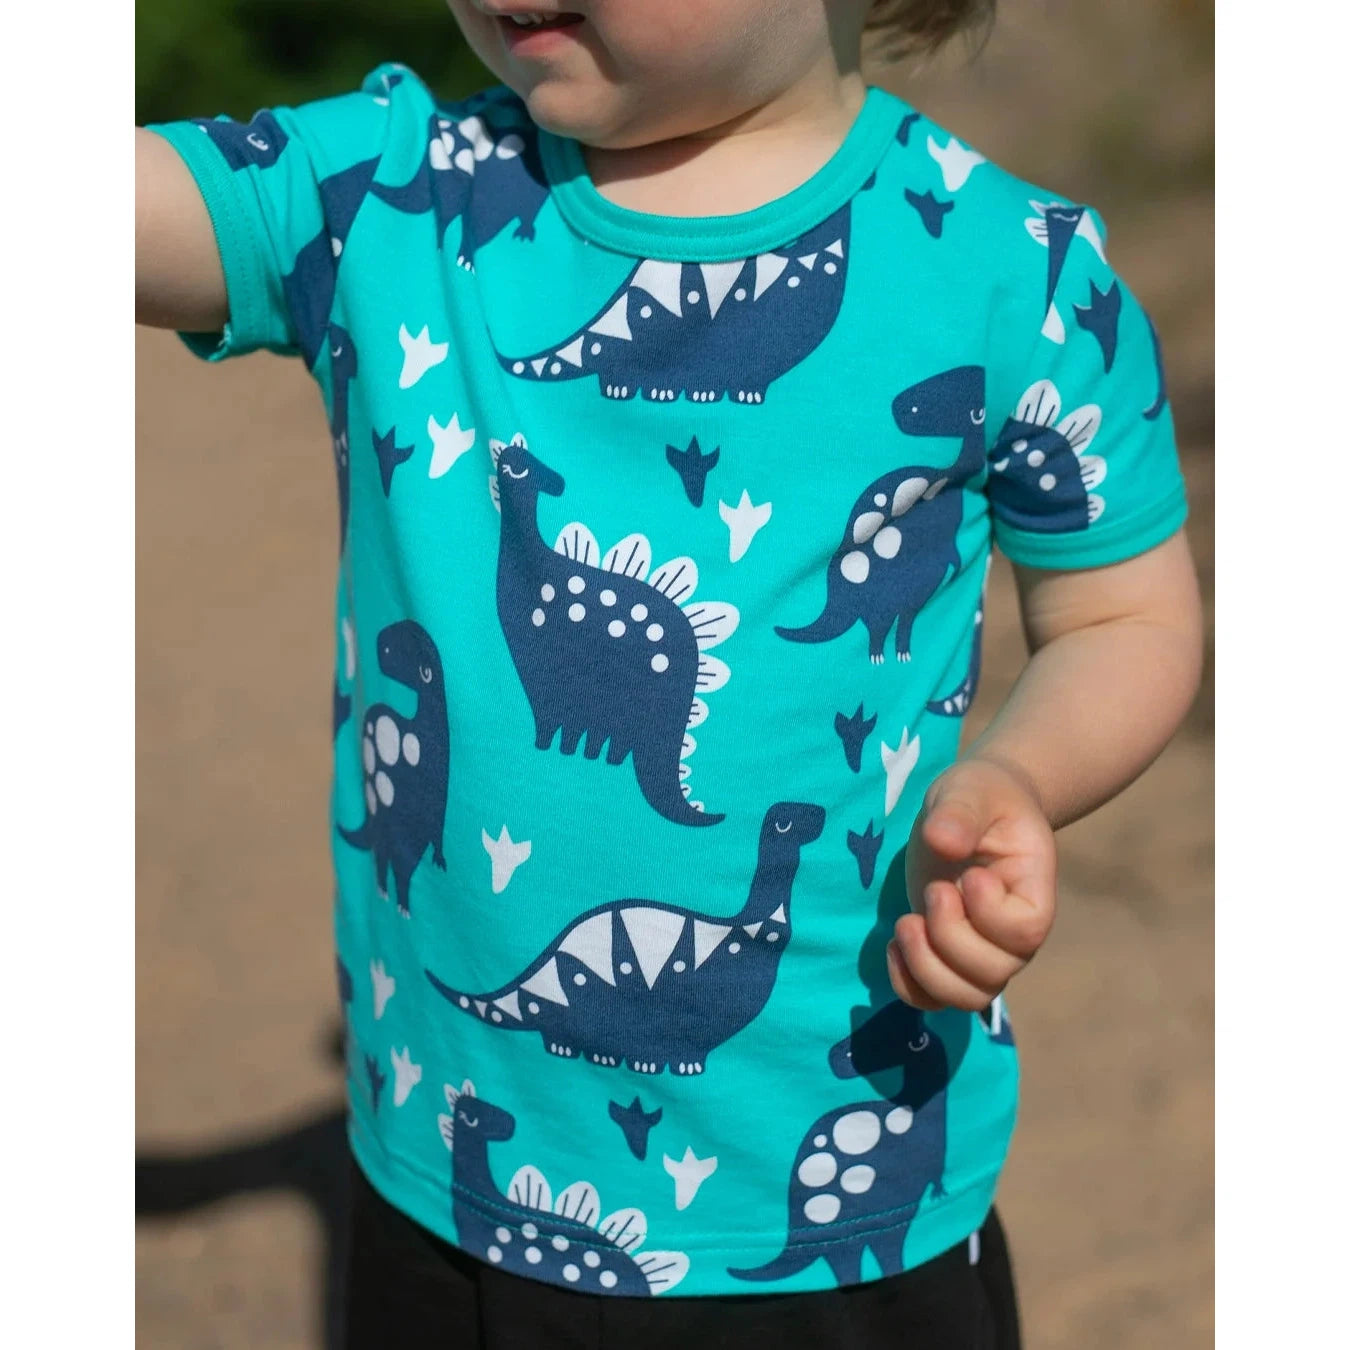 VISA Short Sleeve Shirt - Dinosaur in Turquoise and Blueberry-PaaPii-Modern Rascals